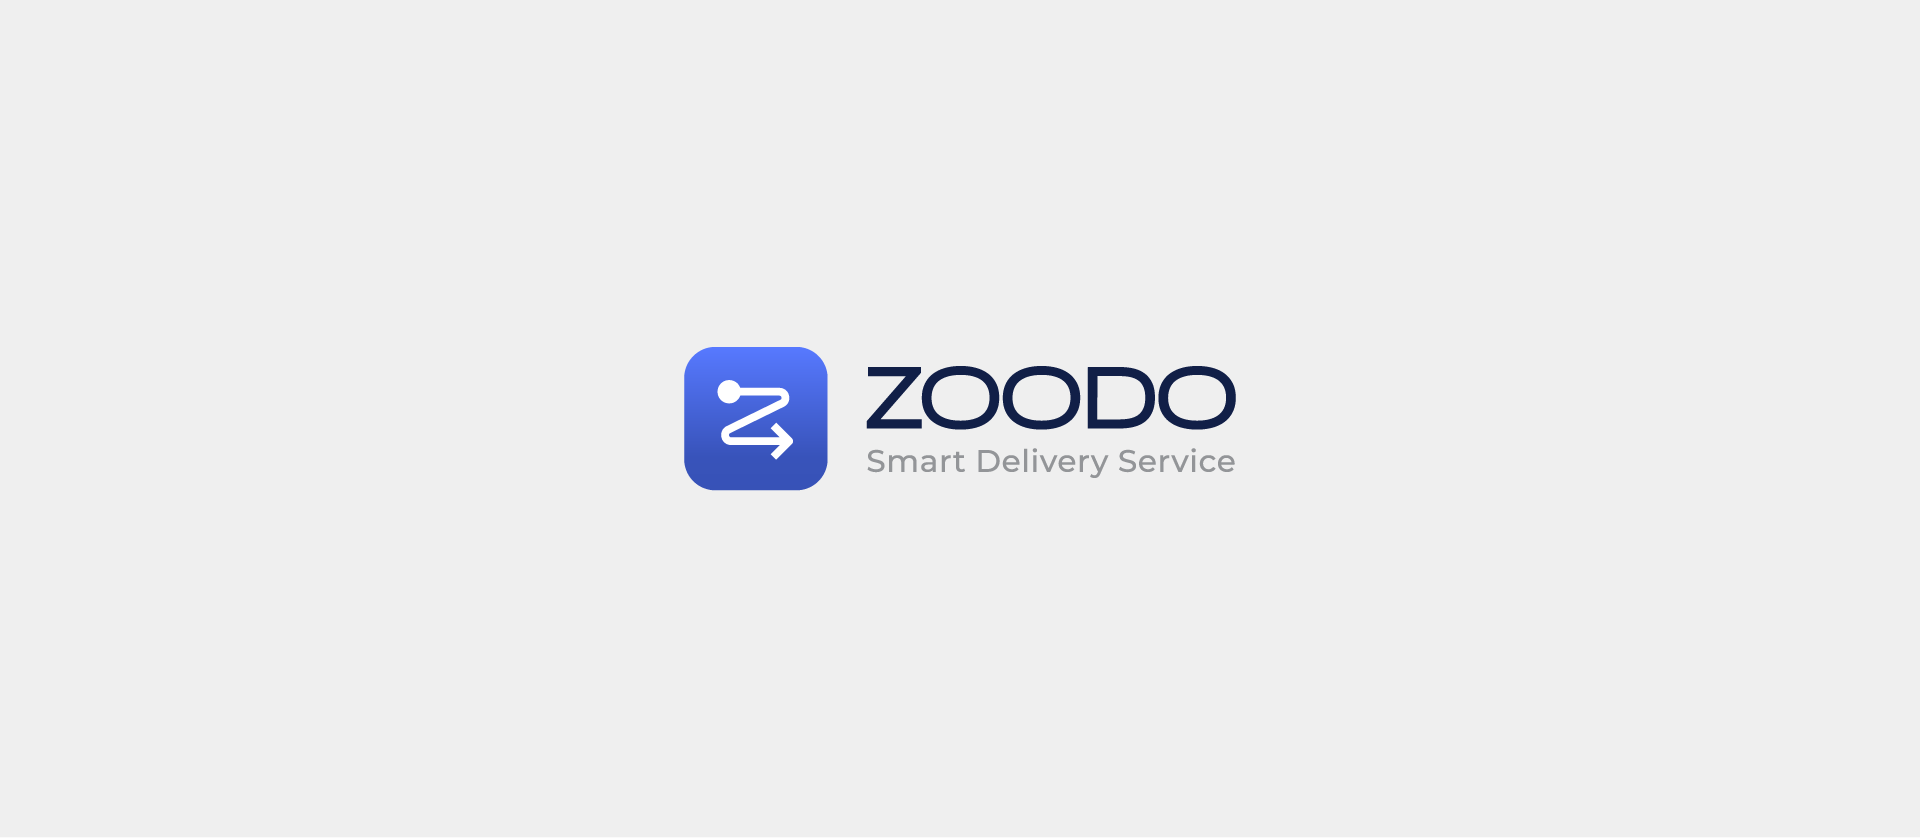 Zoodo - Brand Identity design